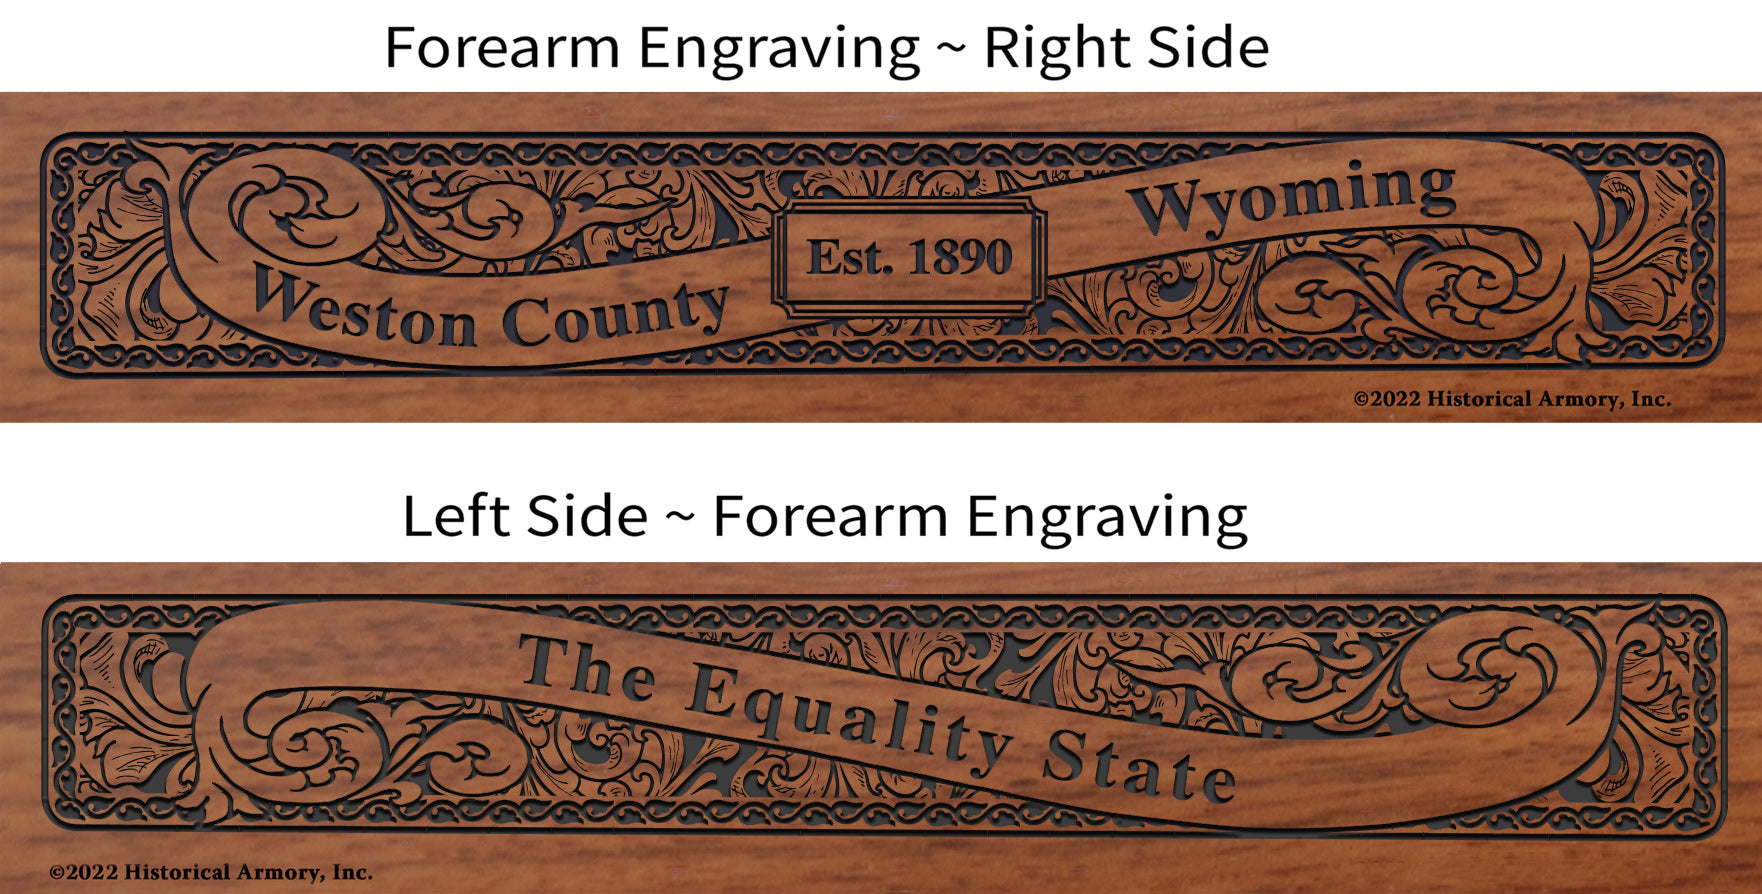 Weston County Wyoming Engraved Rifle Forearm